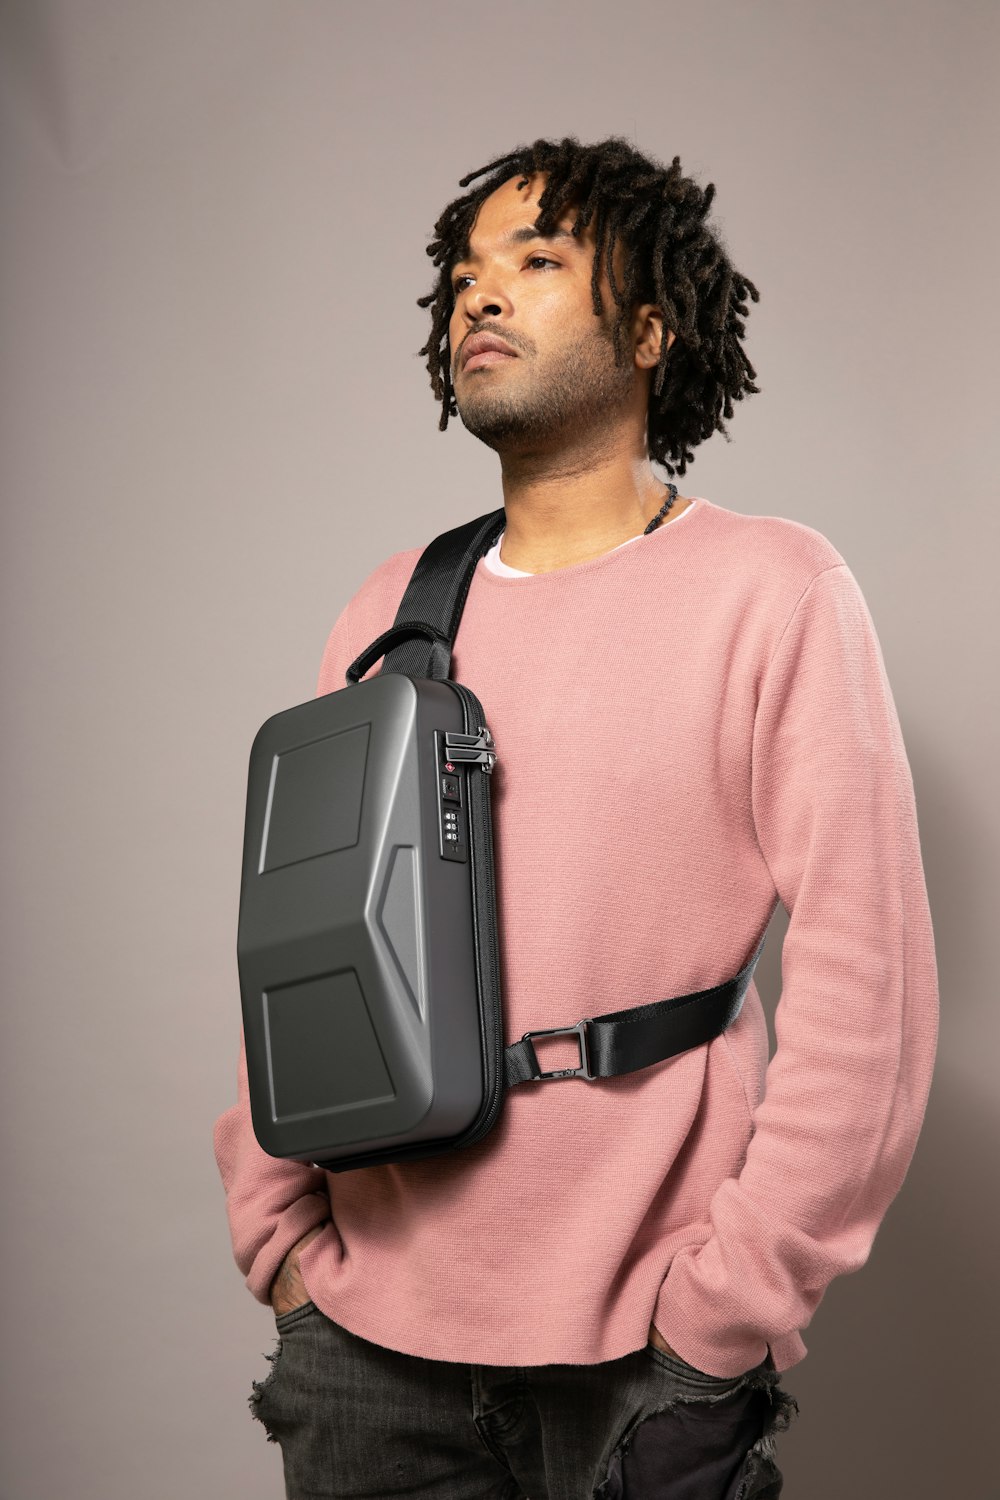 a man with dreadlocks holding a black bag